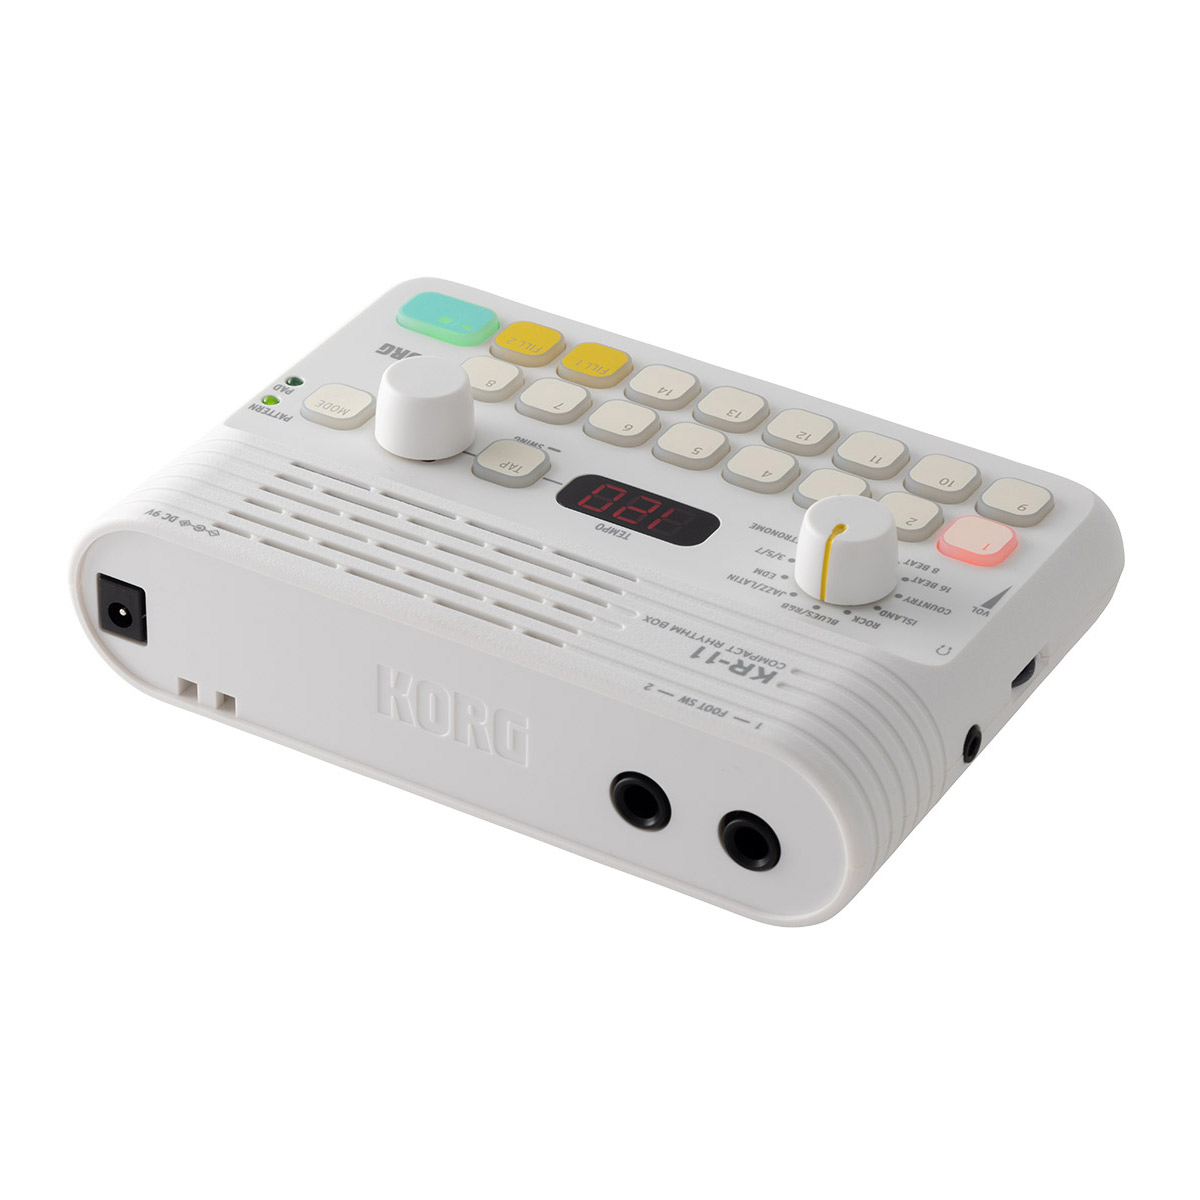 KORG Korg KR-11 + power supply adaptor + pedal switch ×2 piece set speaker built-in rhythm box rhythm machine KR11